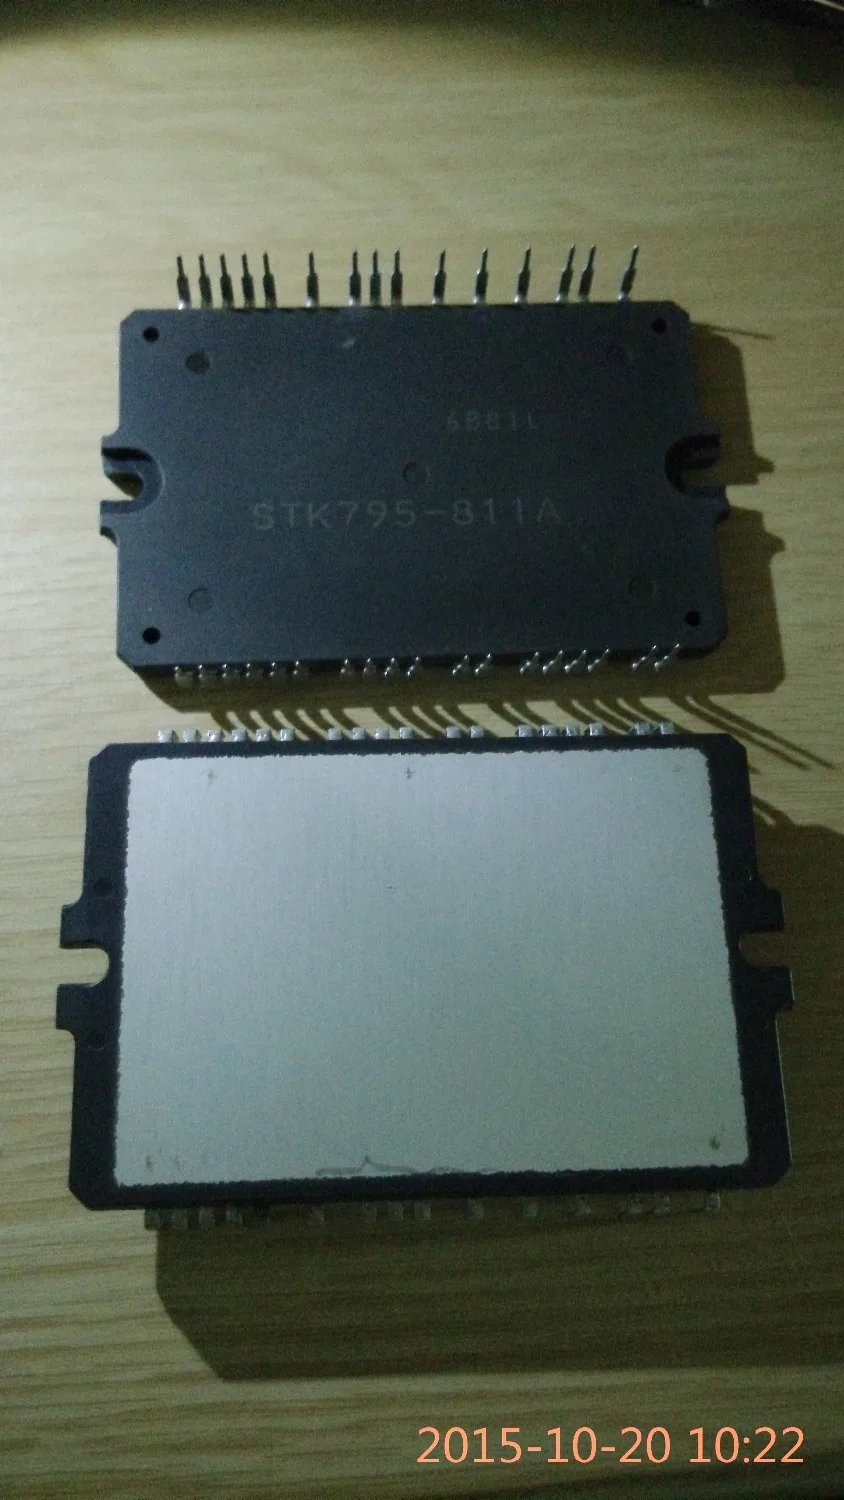 STK795-811A LCD plazma modulis STK795 LG42V7 Y valdybos Z valdybos nemokamas pristatymas